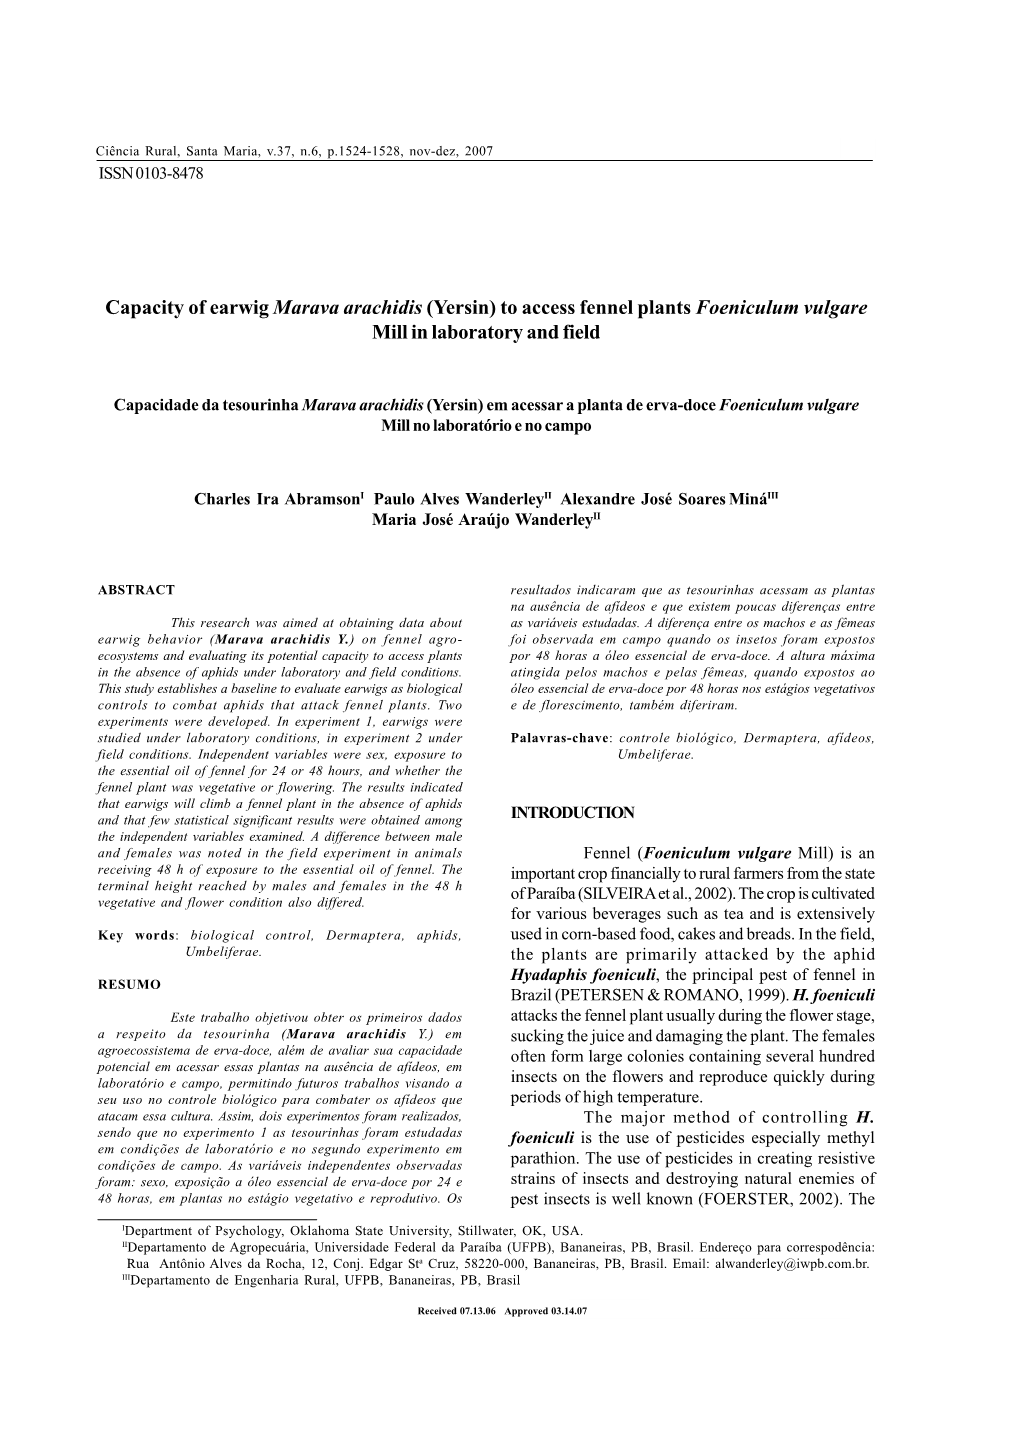 Capacity of Earwig Marava Arachidis (Yersin) to Access Fennel Plants Foeniculum Vulgare Mill in Laboratory and Field